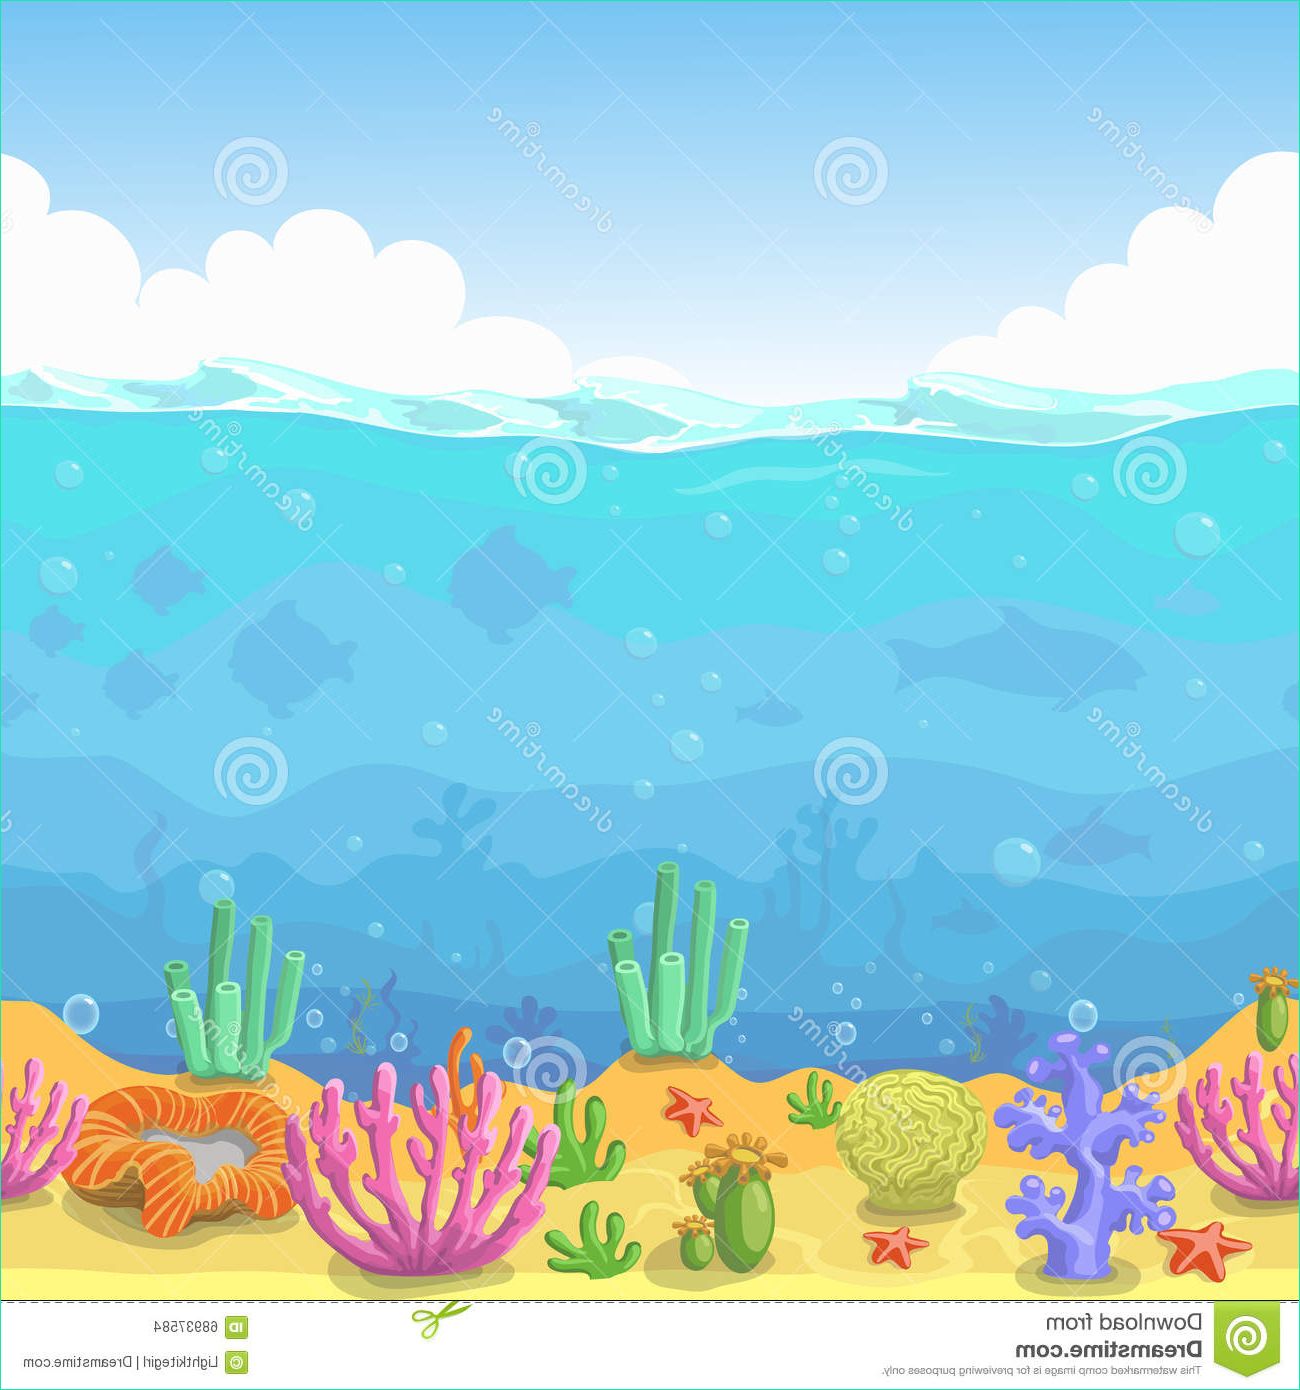 stock illustration seamless underwater landscape cartoon style fish coral vector illustration game design image